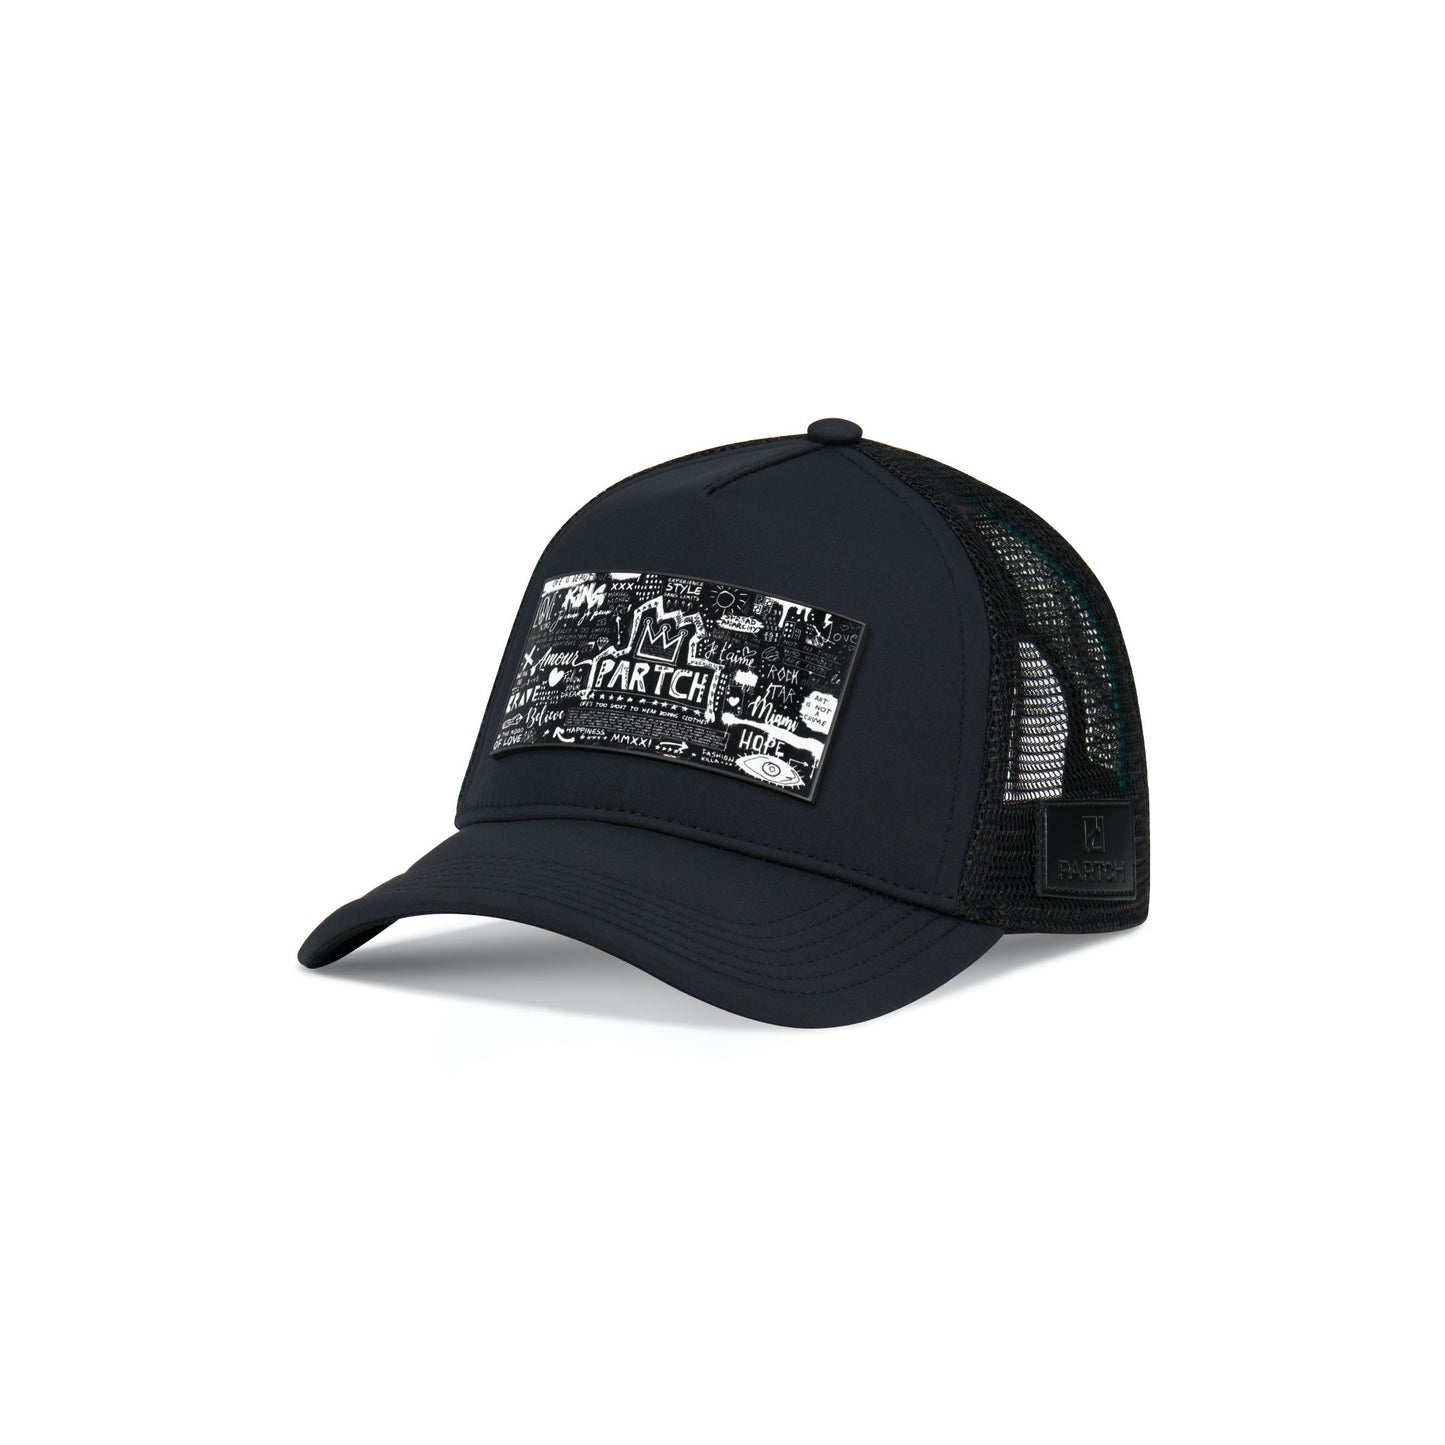 Partch Trucker Hat Black with PARTCH-Clip Pop Love Front View